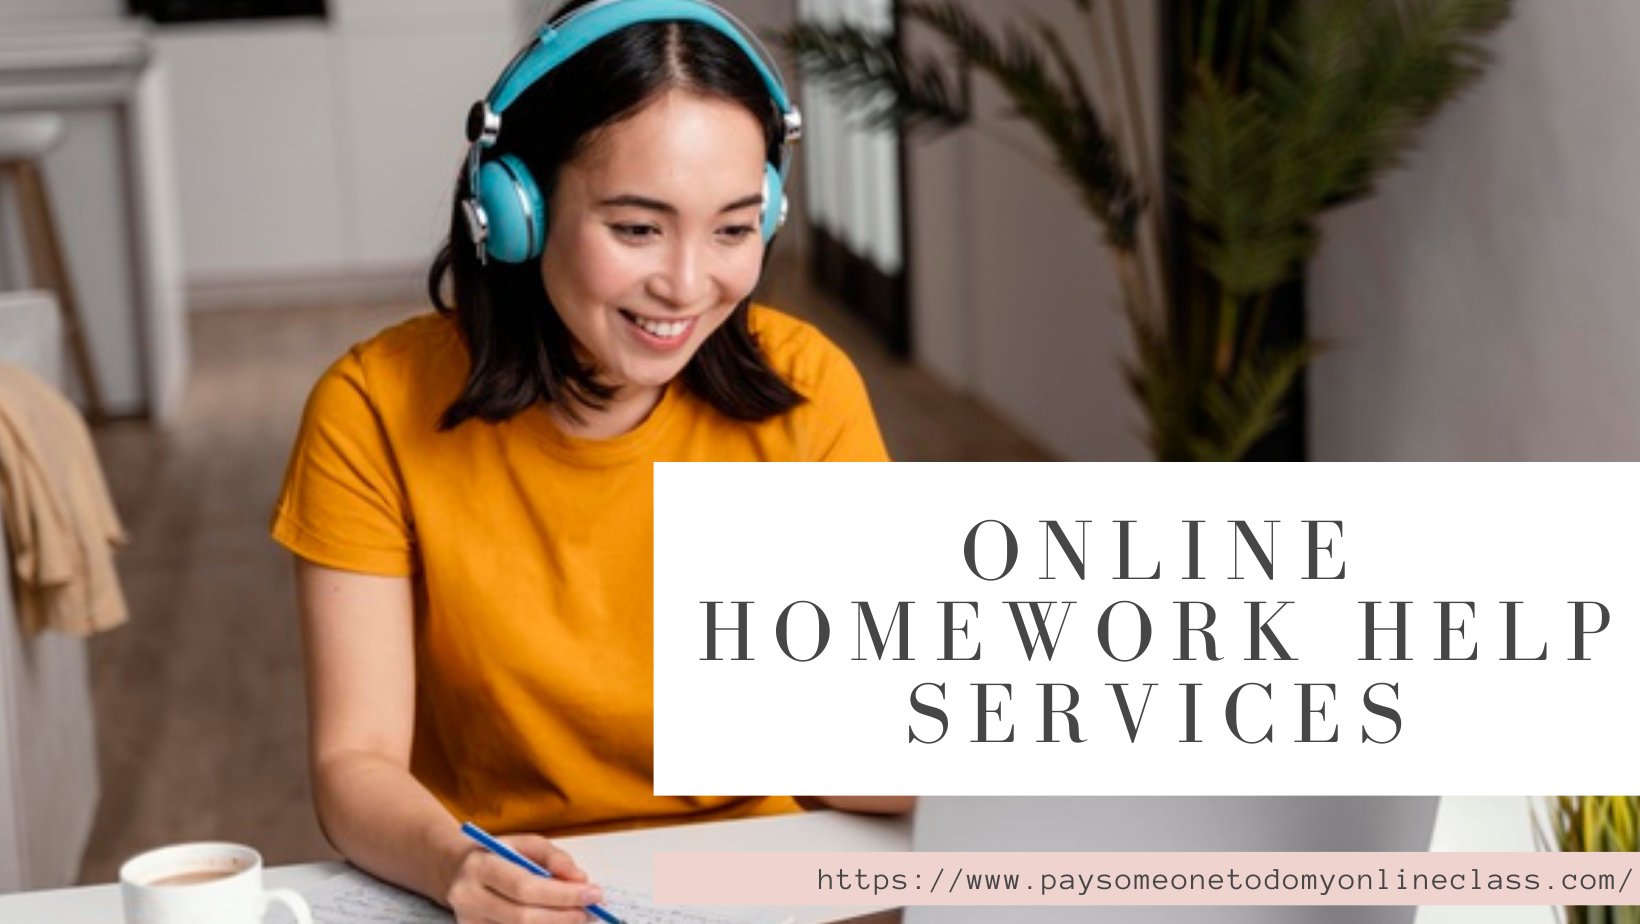 homework help services